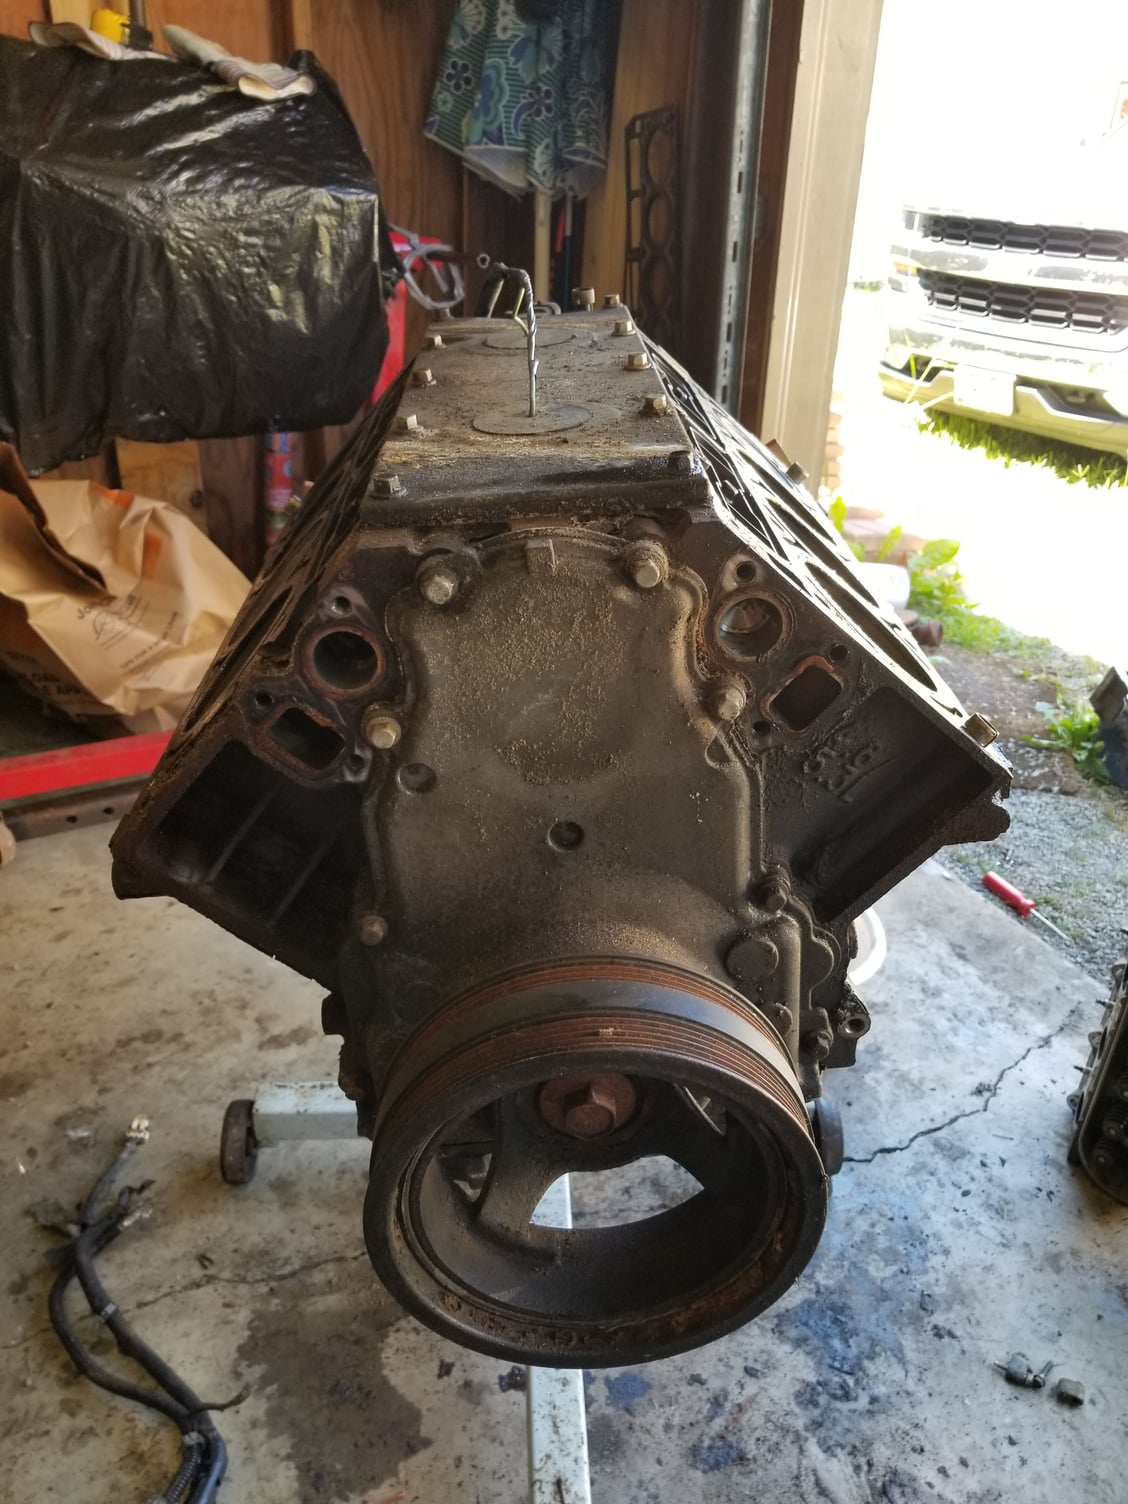  - Misc Engine parts. - Salem, OH 44460, United States